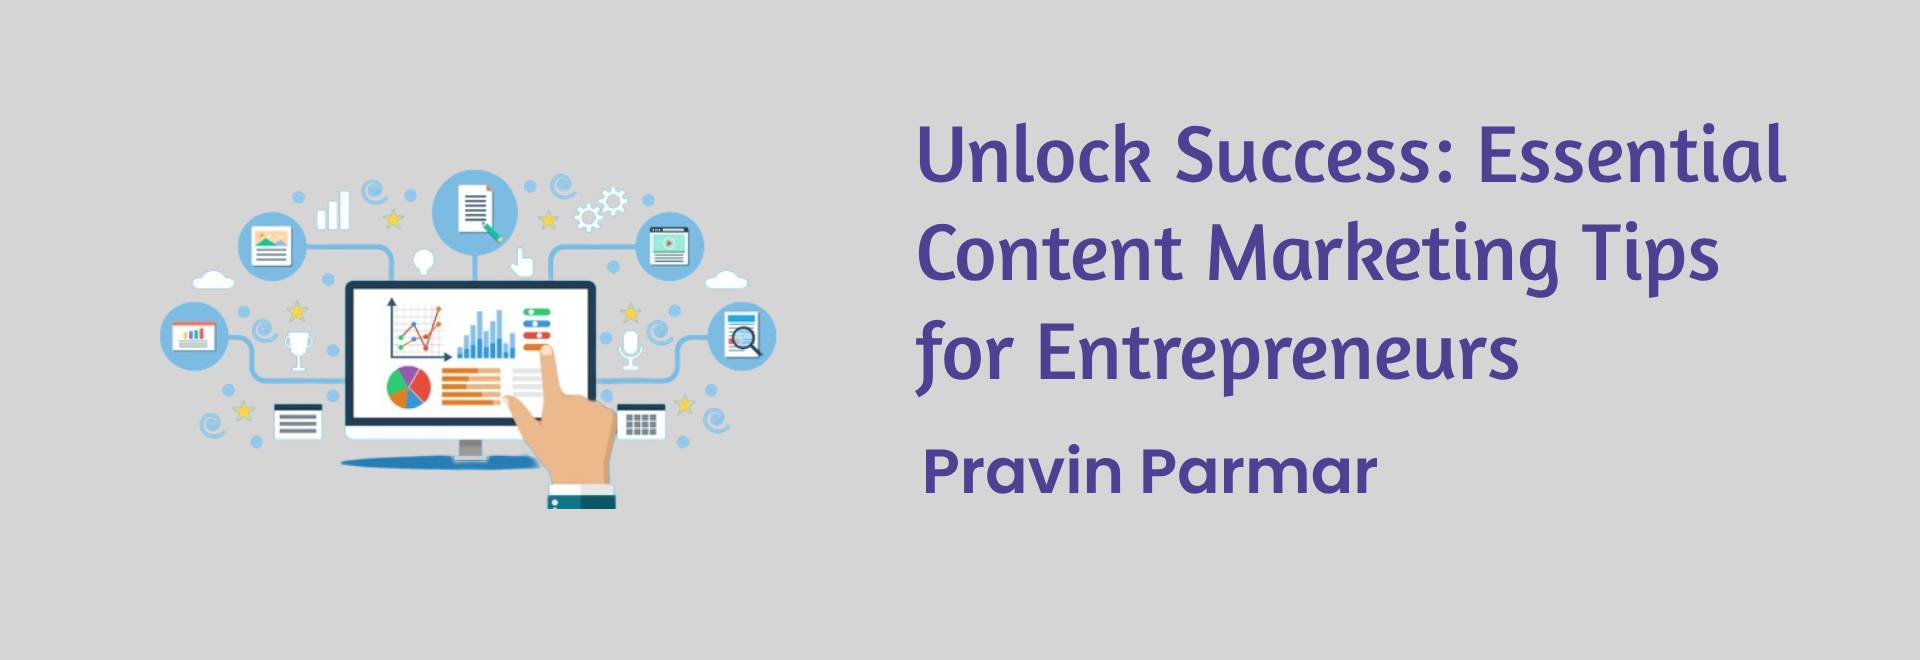 Unlock Success: Essential Content Marketing Tips for Entrepreneurs